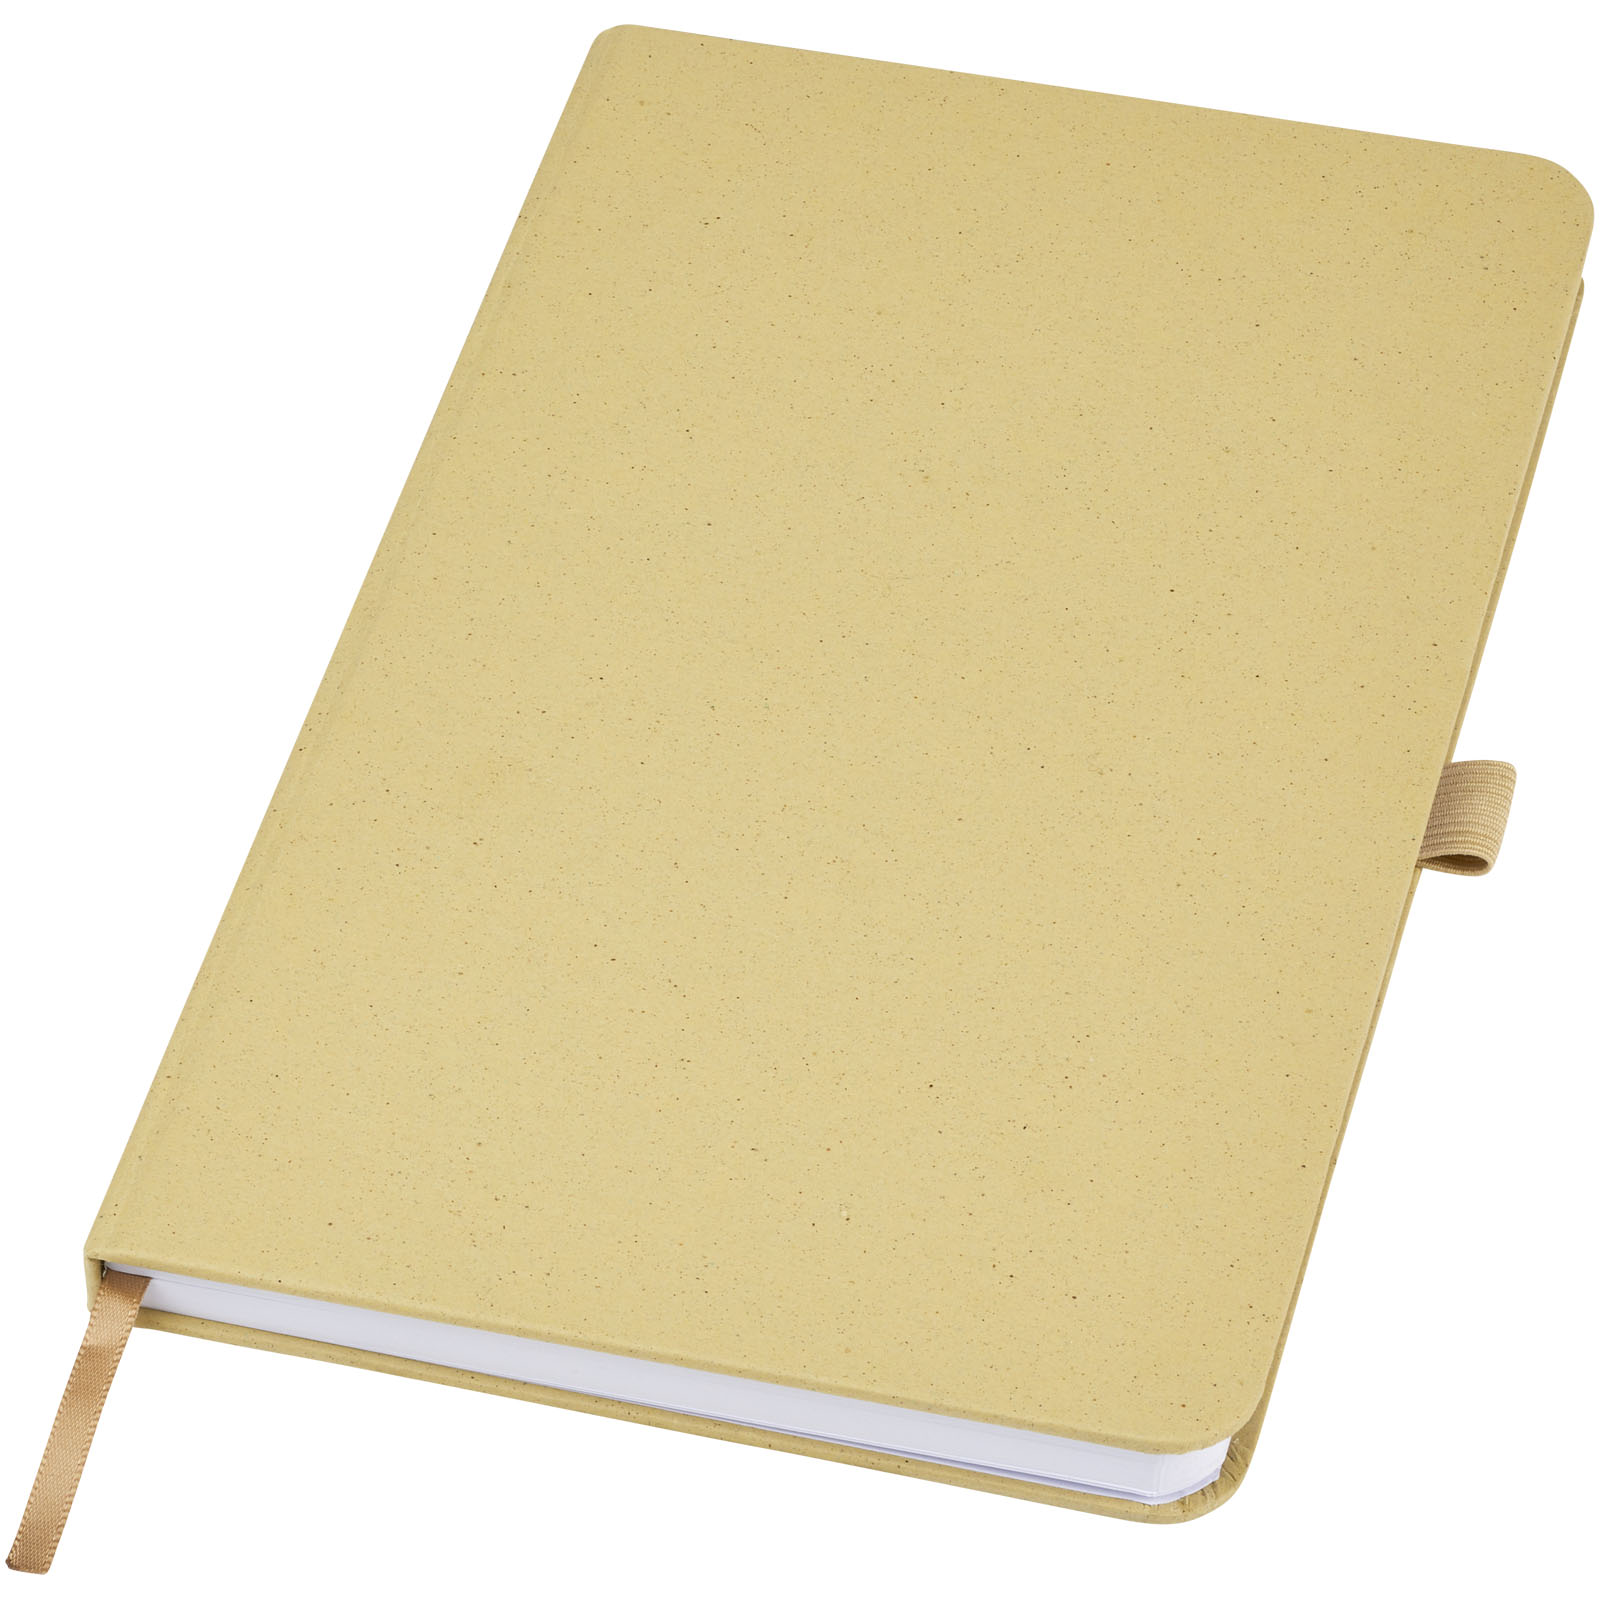 Linkovaný zápisník s pevnou obálkou z drceného papíru LEAST